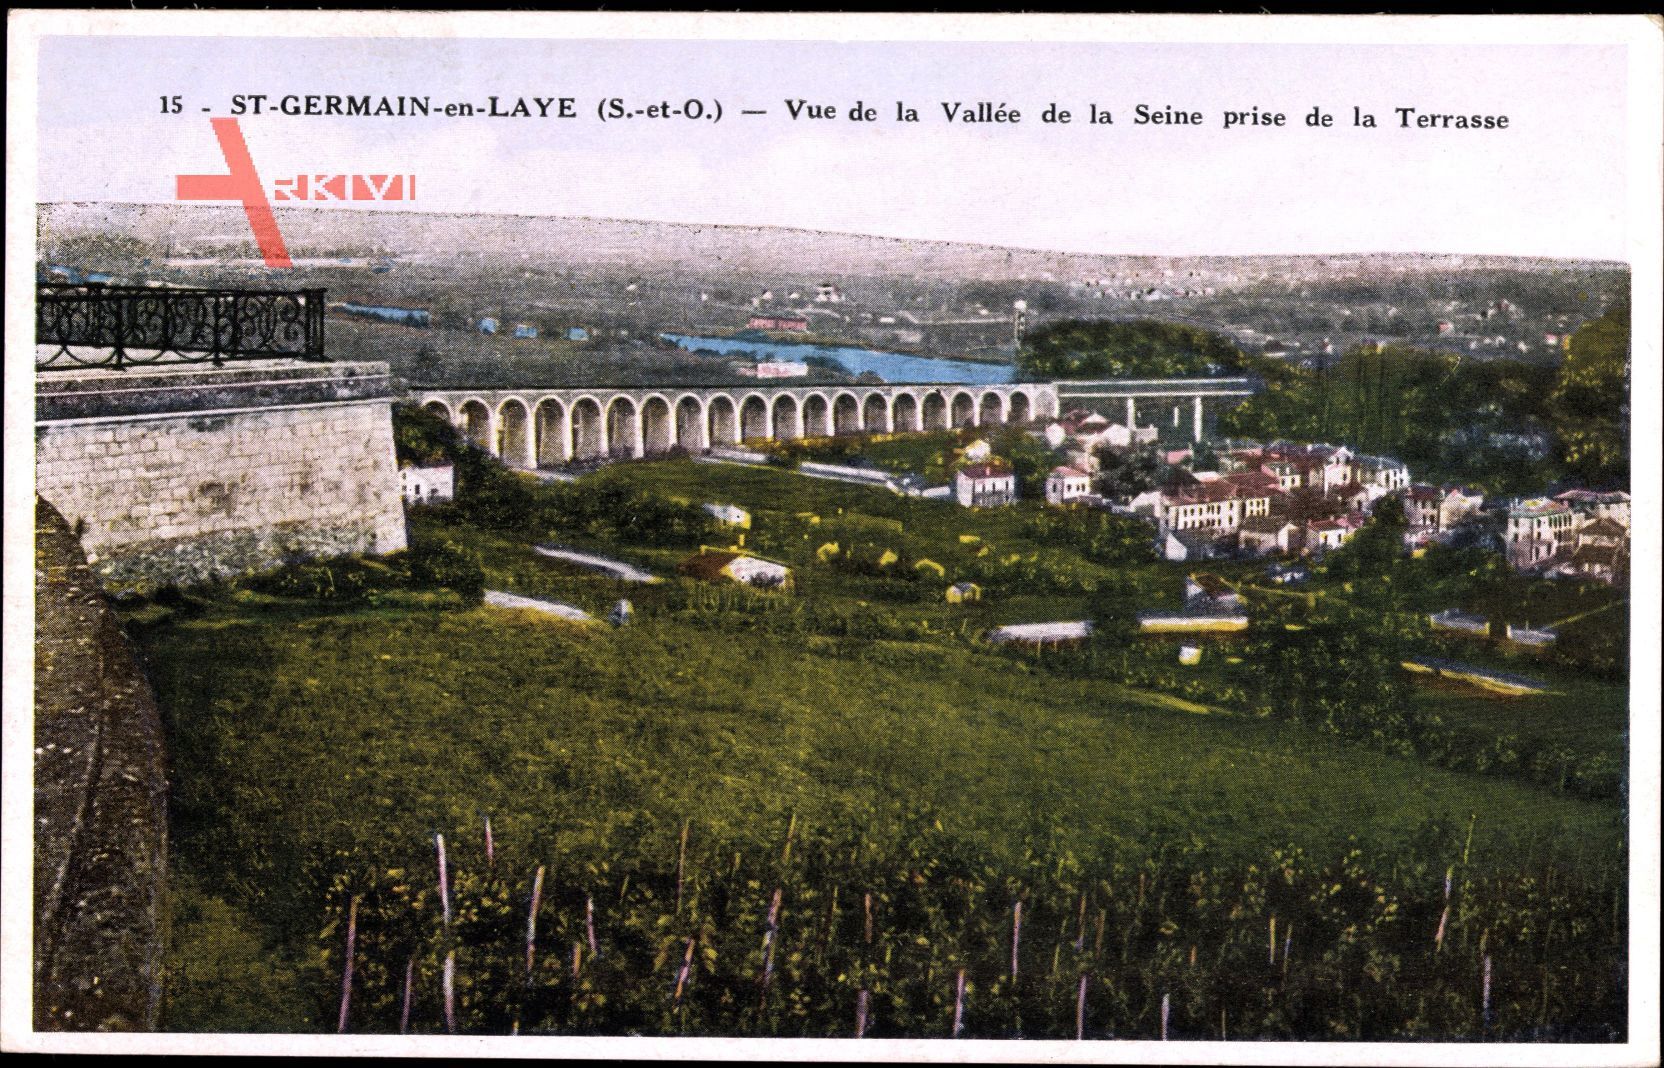 St. Germain en Laye Saine et Oise Yvelines, Vue de la Vallee de la Seine